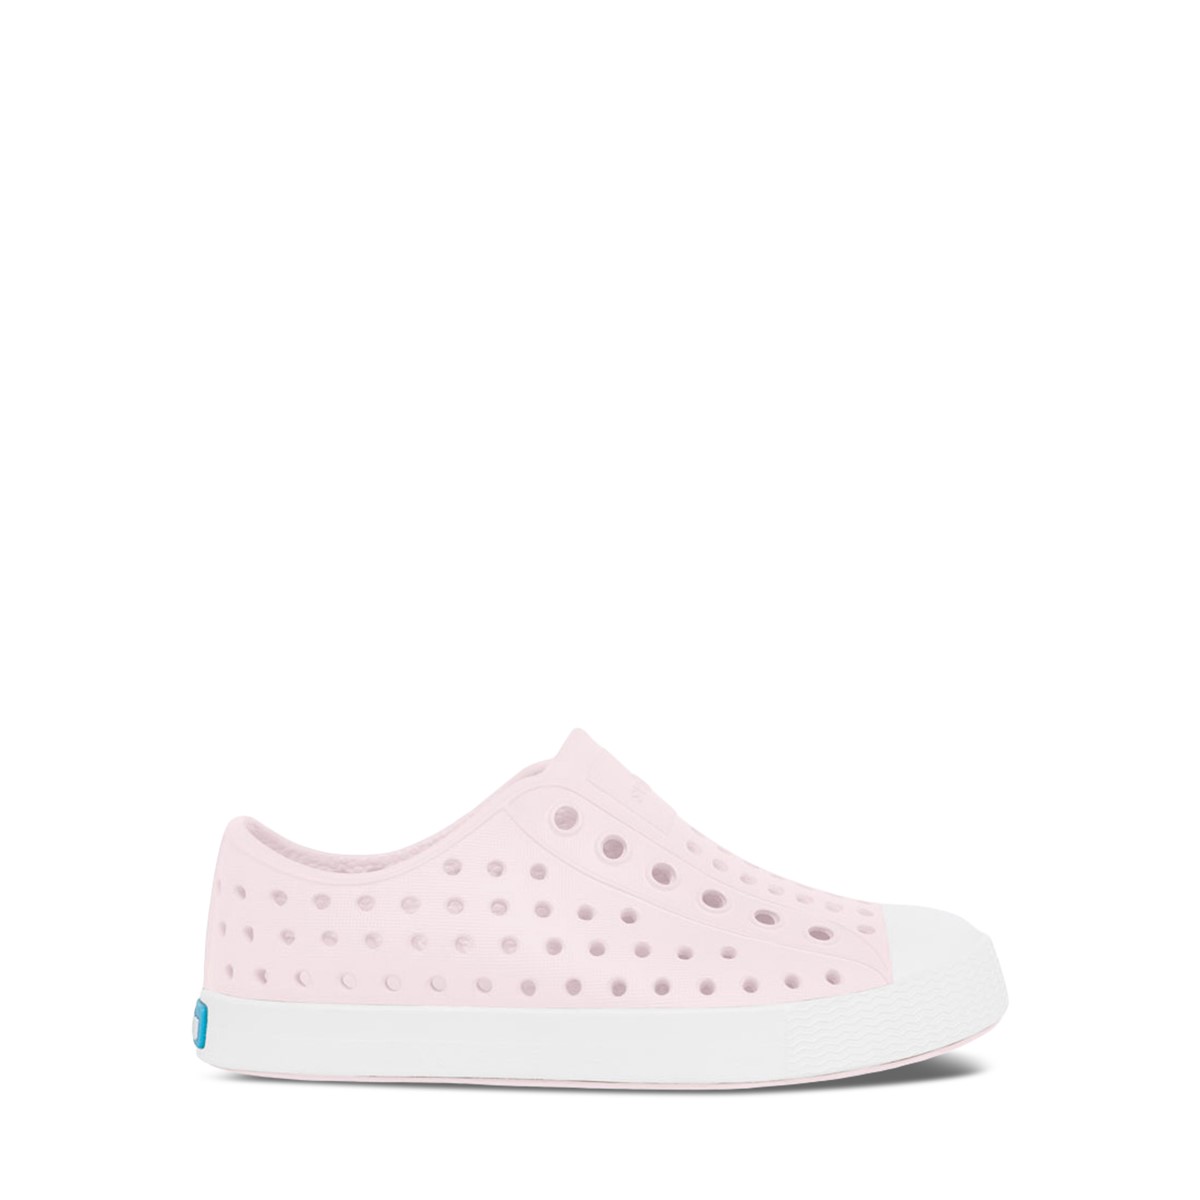 Little Kids' Jefferson Slip-On Shoes in Pink/White